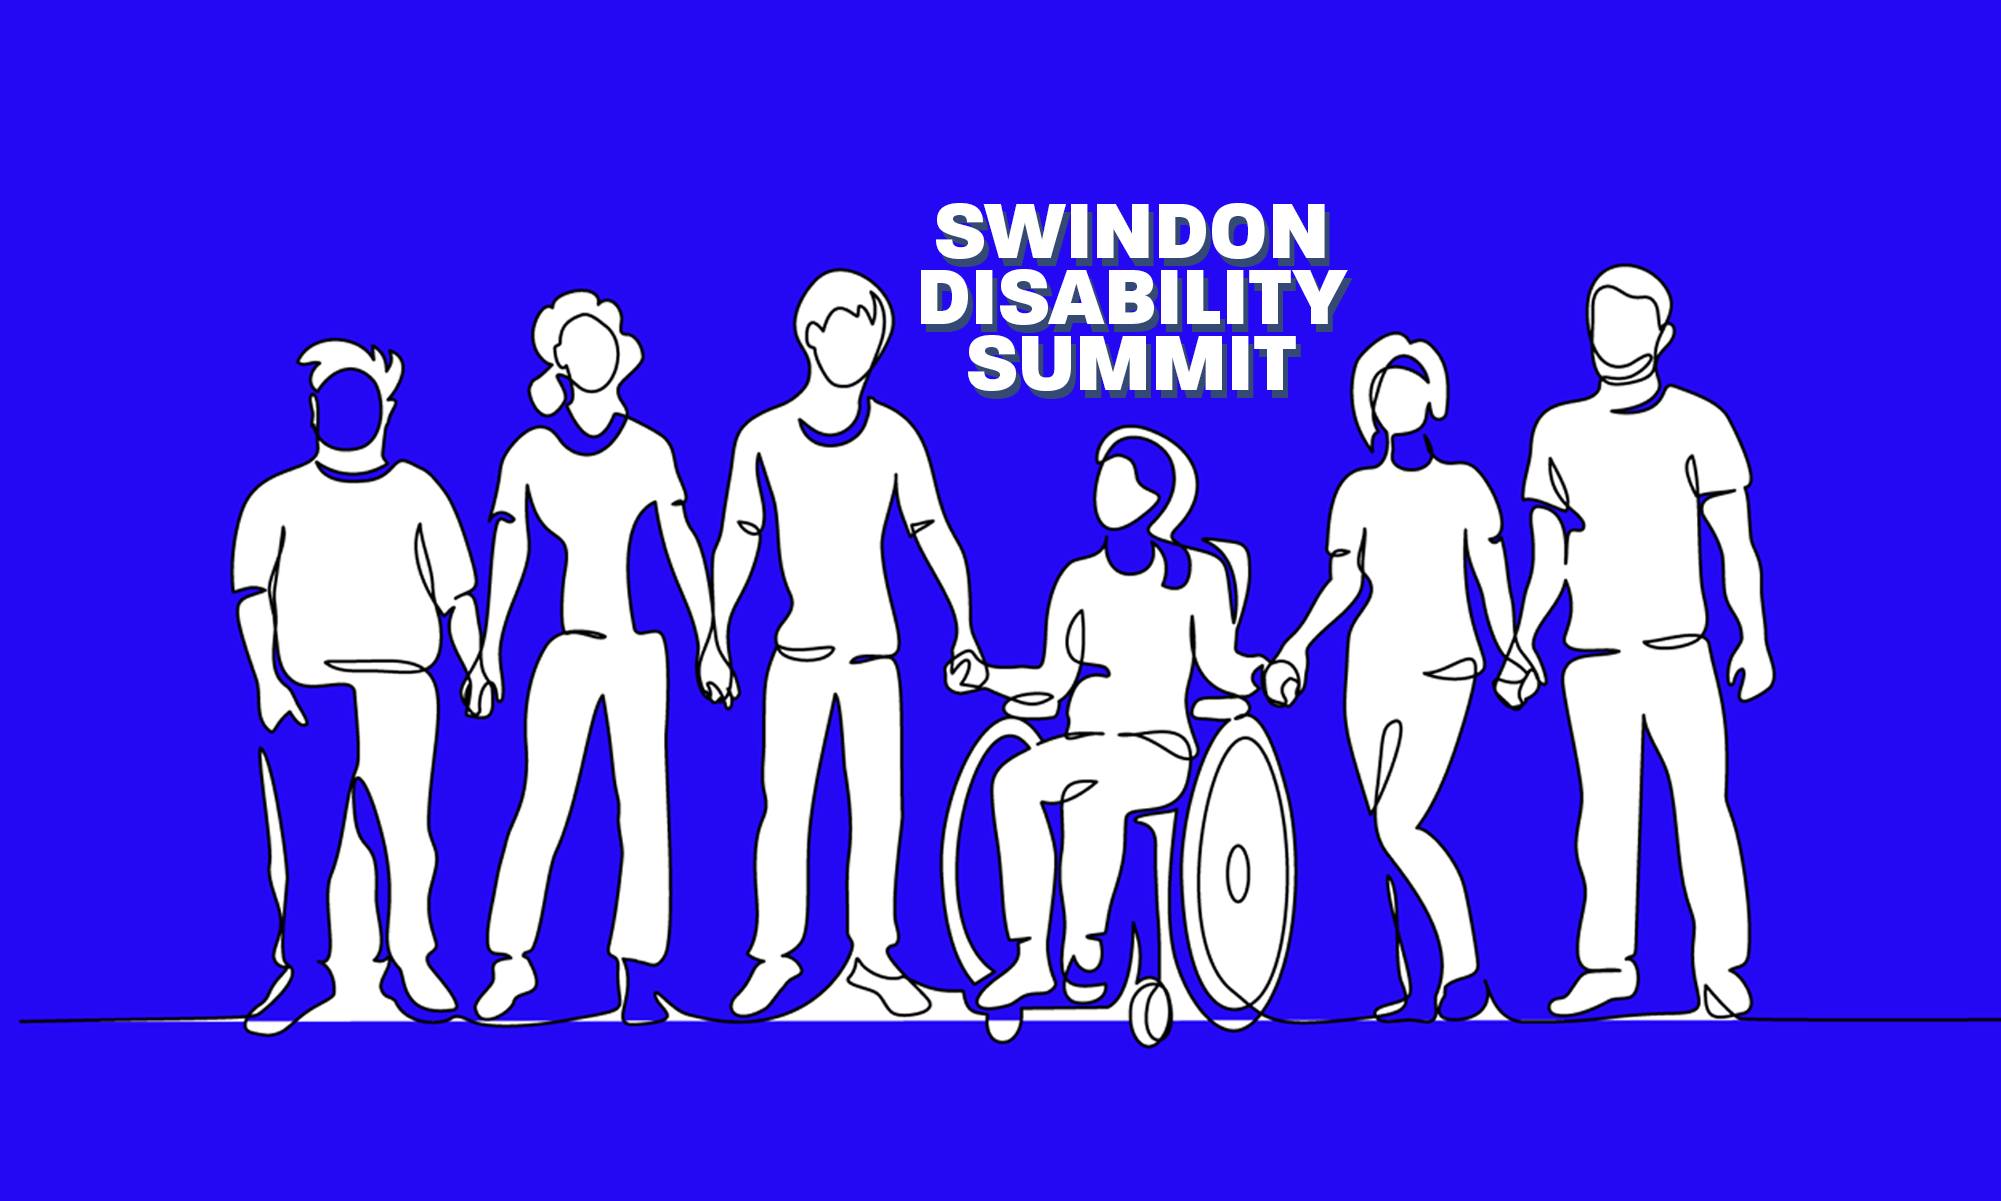 swindon disability summit logo